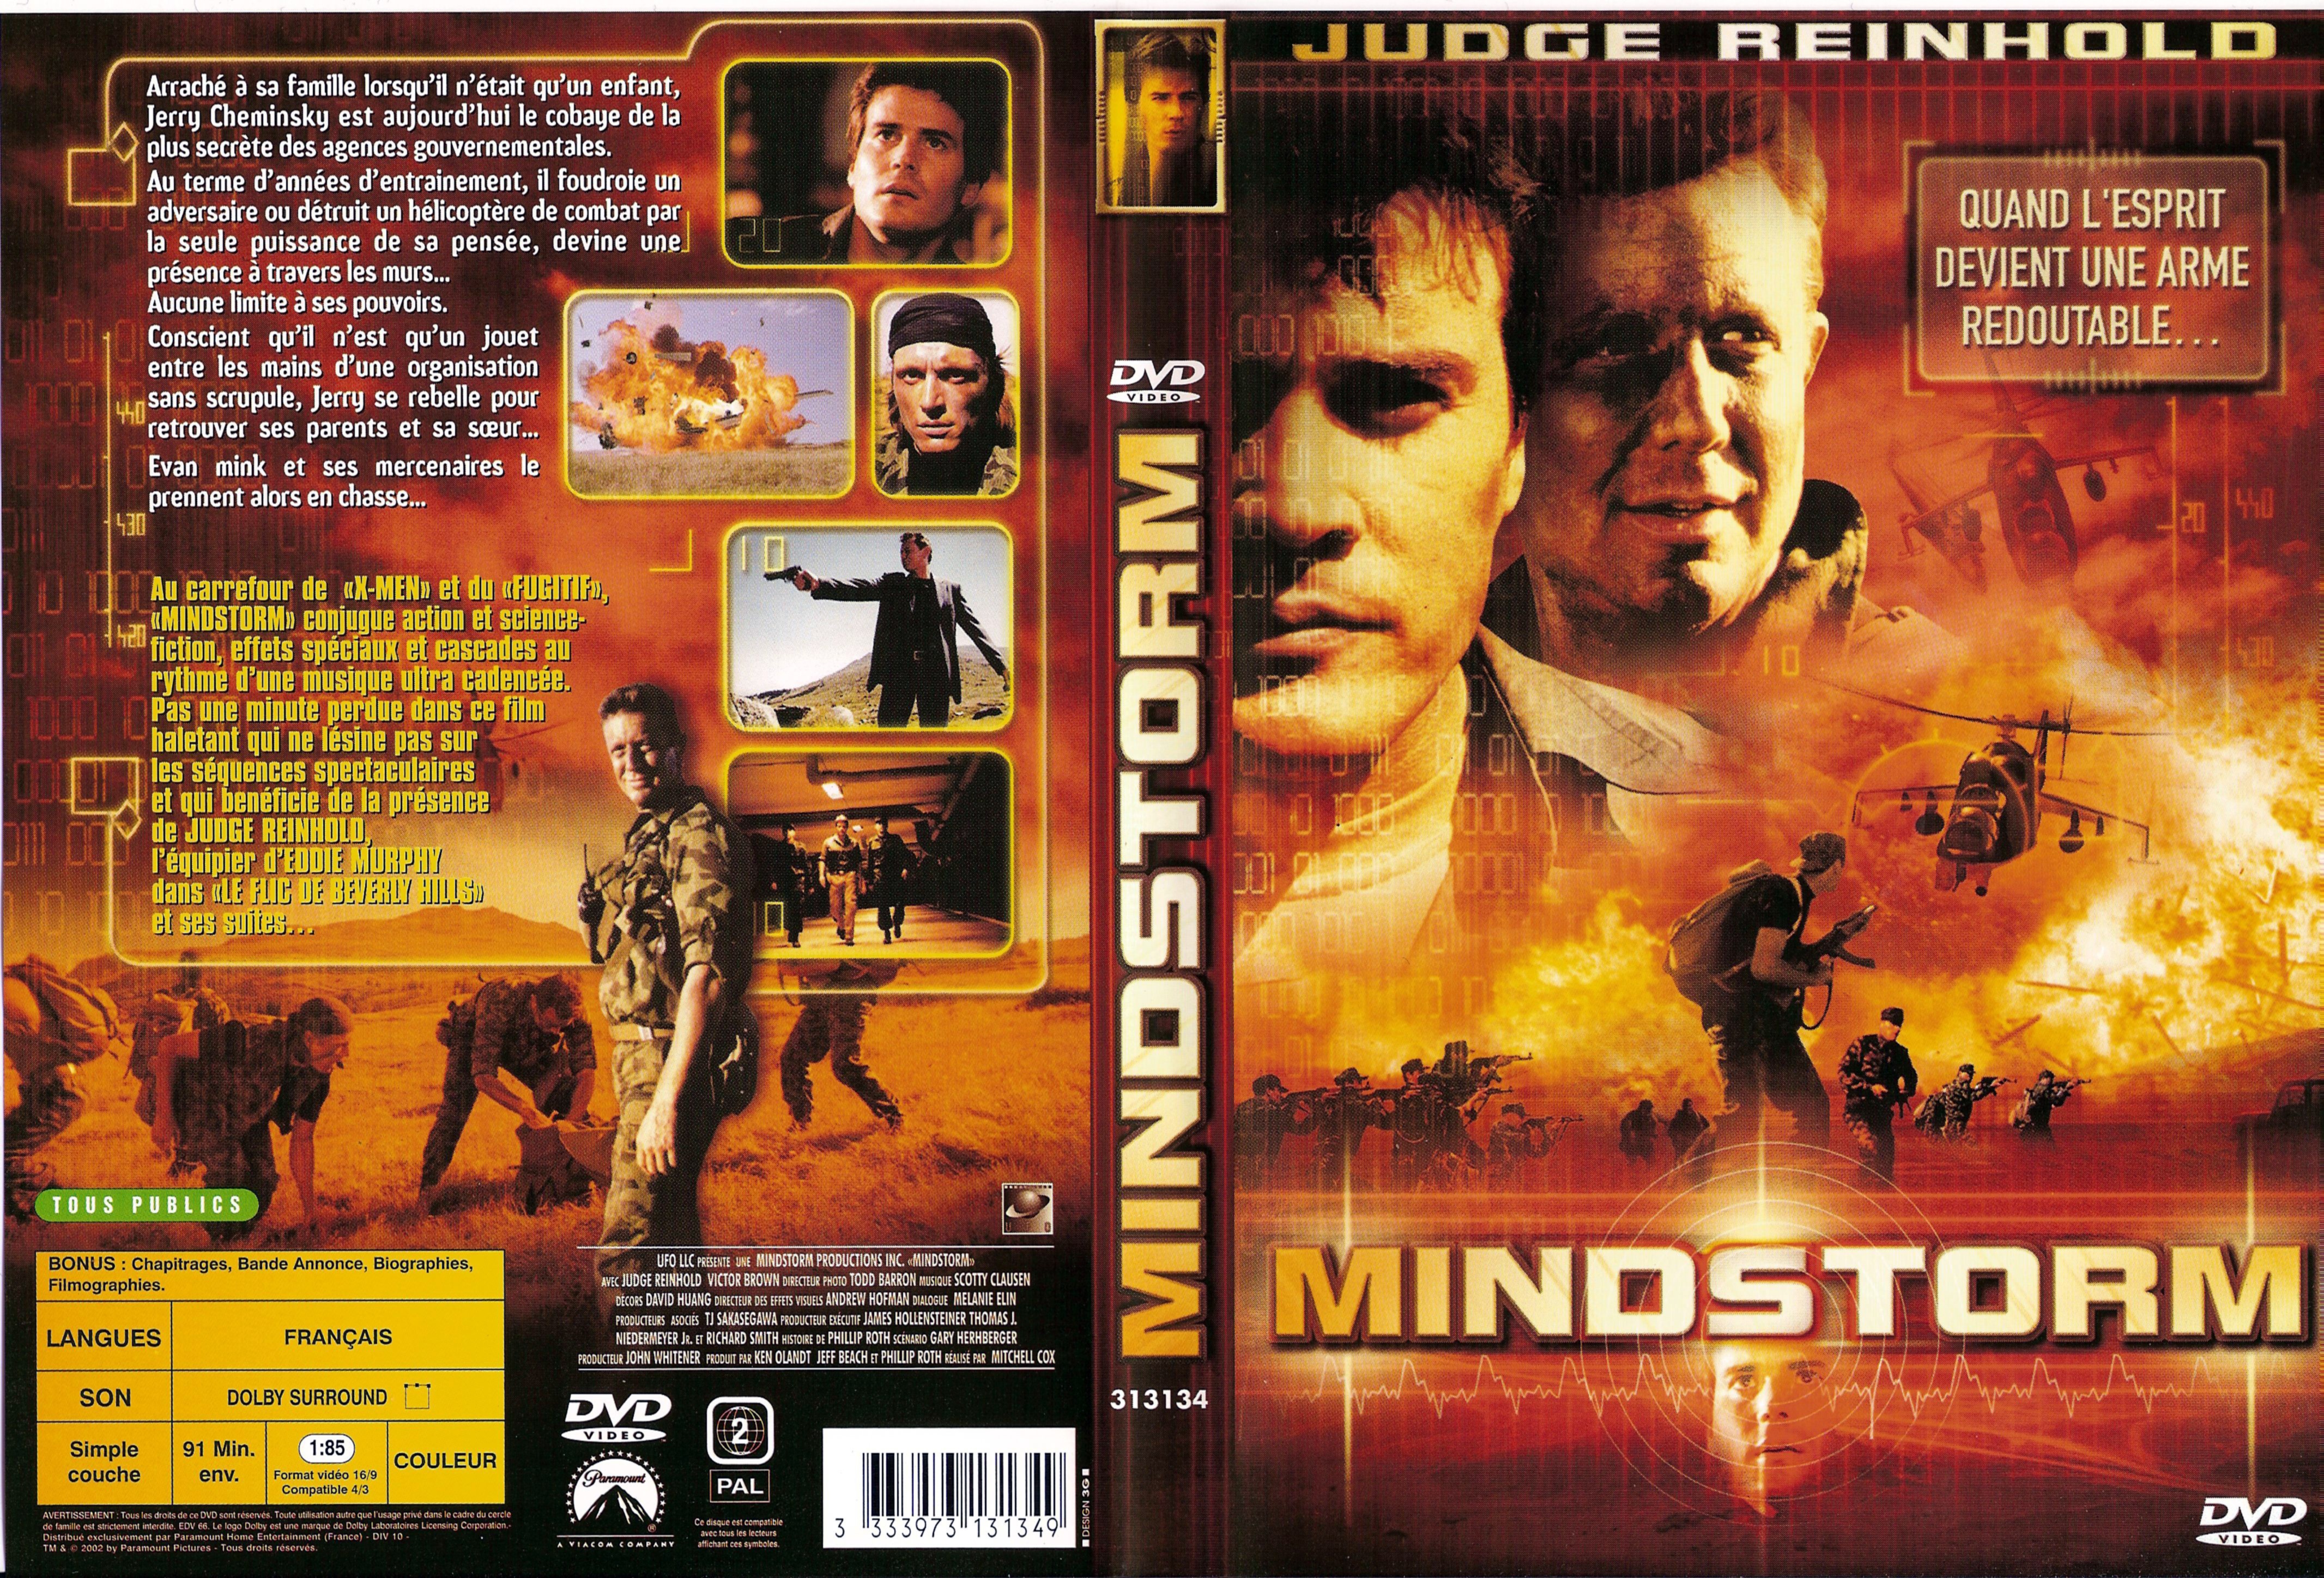 Jaquette DVD Mindstorm